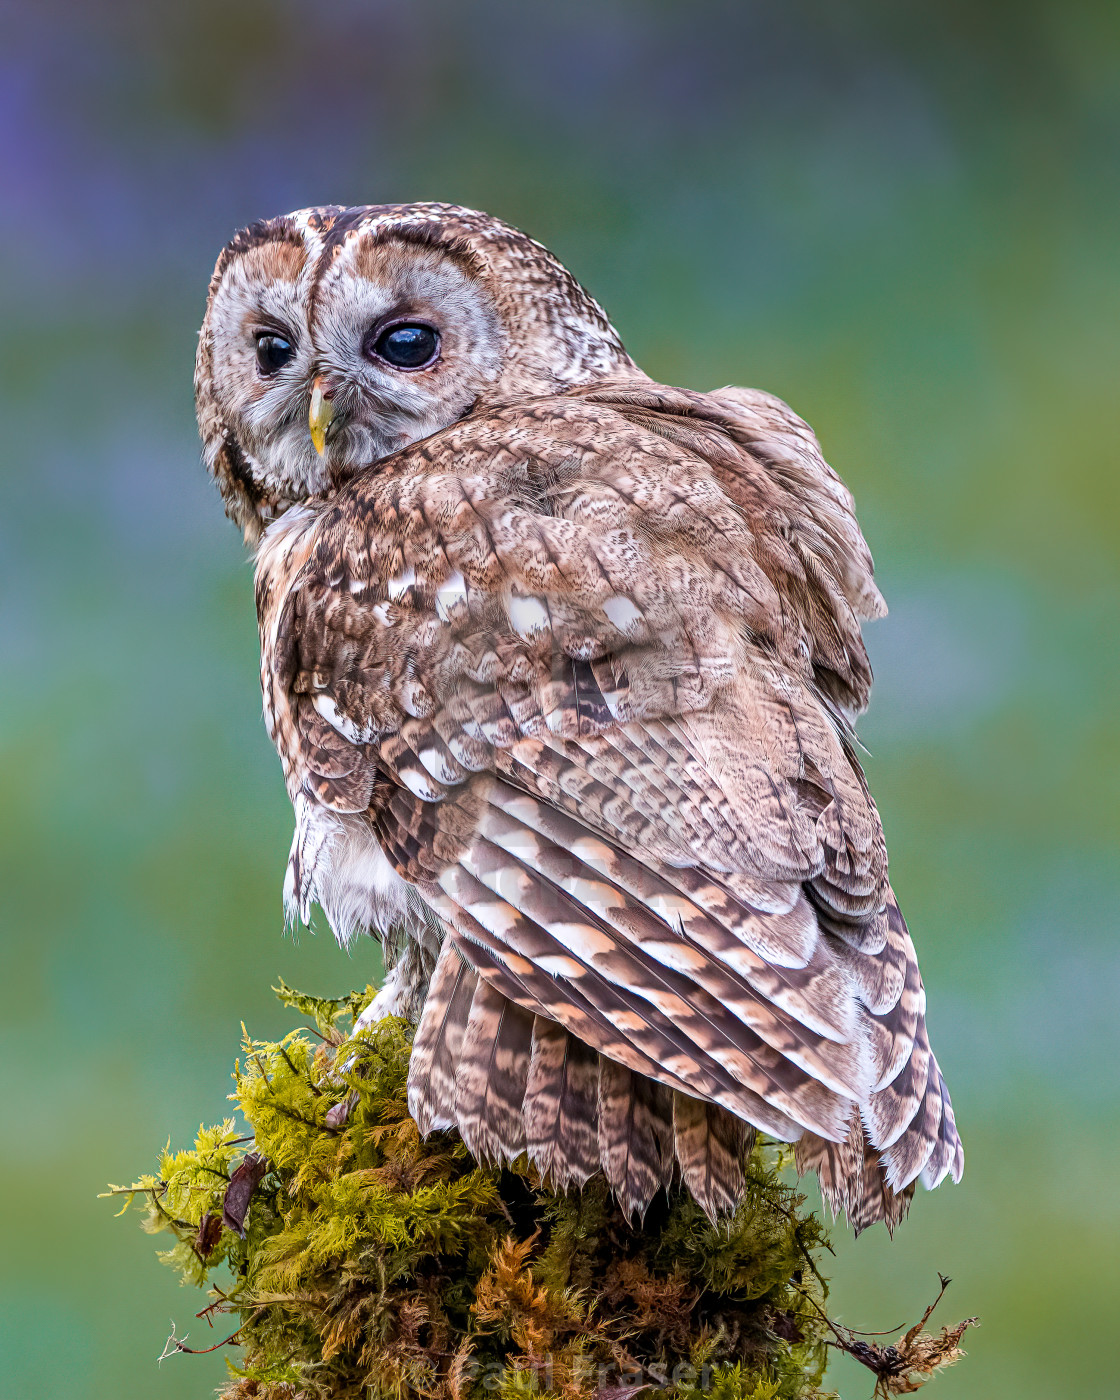 "Early Morning Tawny Owl" stock image